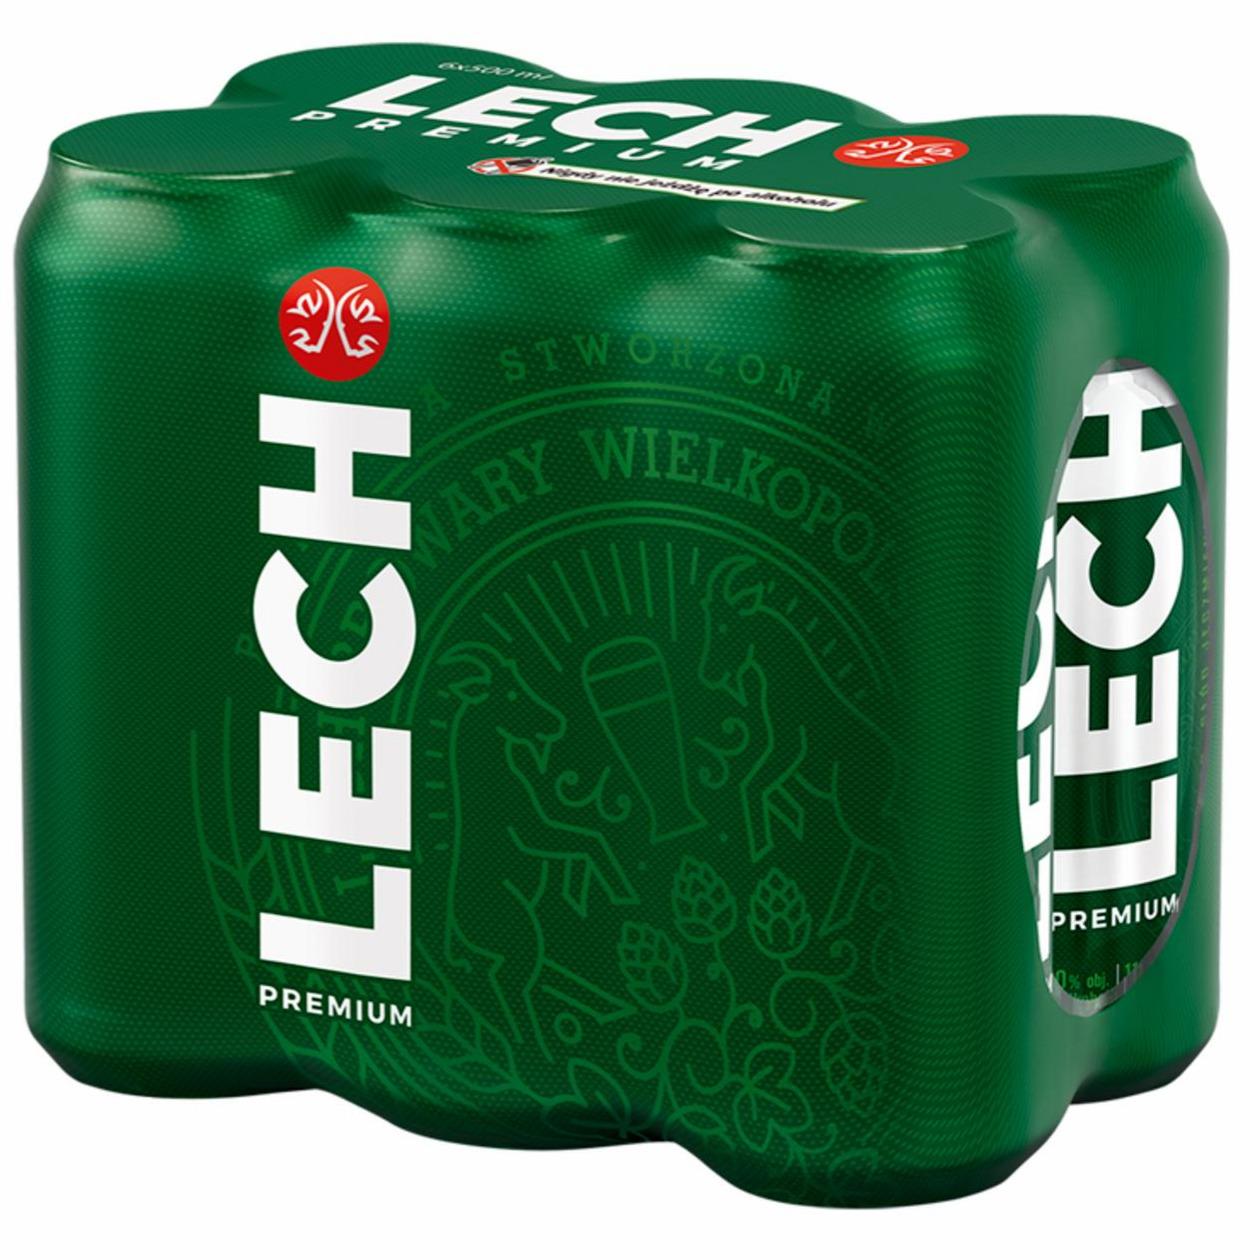 Zdjęcia - Lech Premium Piwo jasne 500 ml